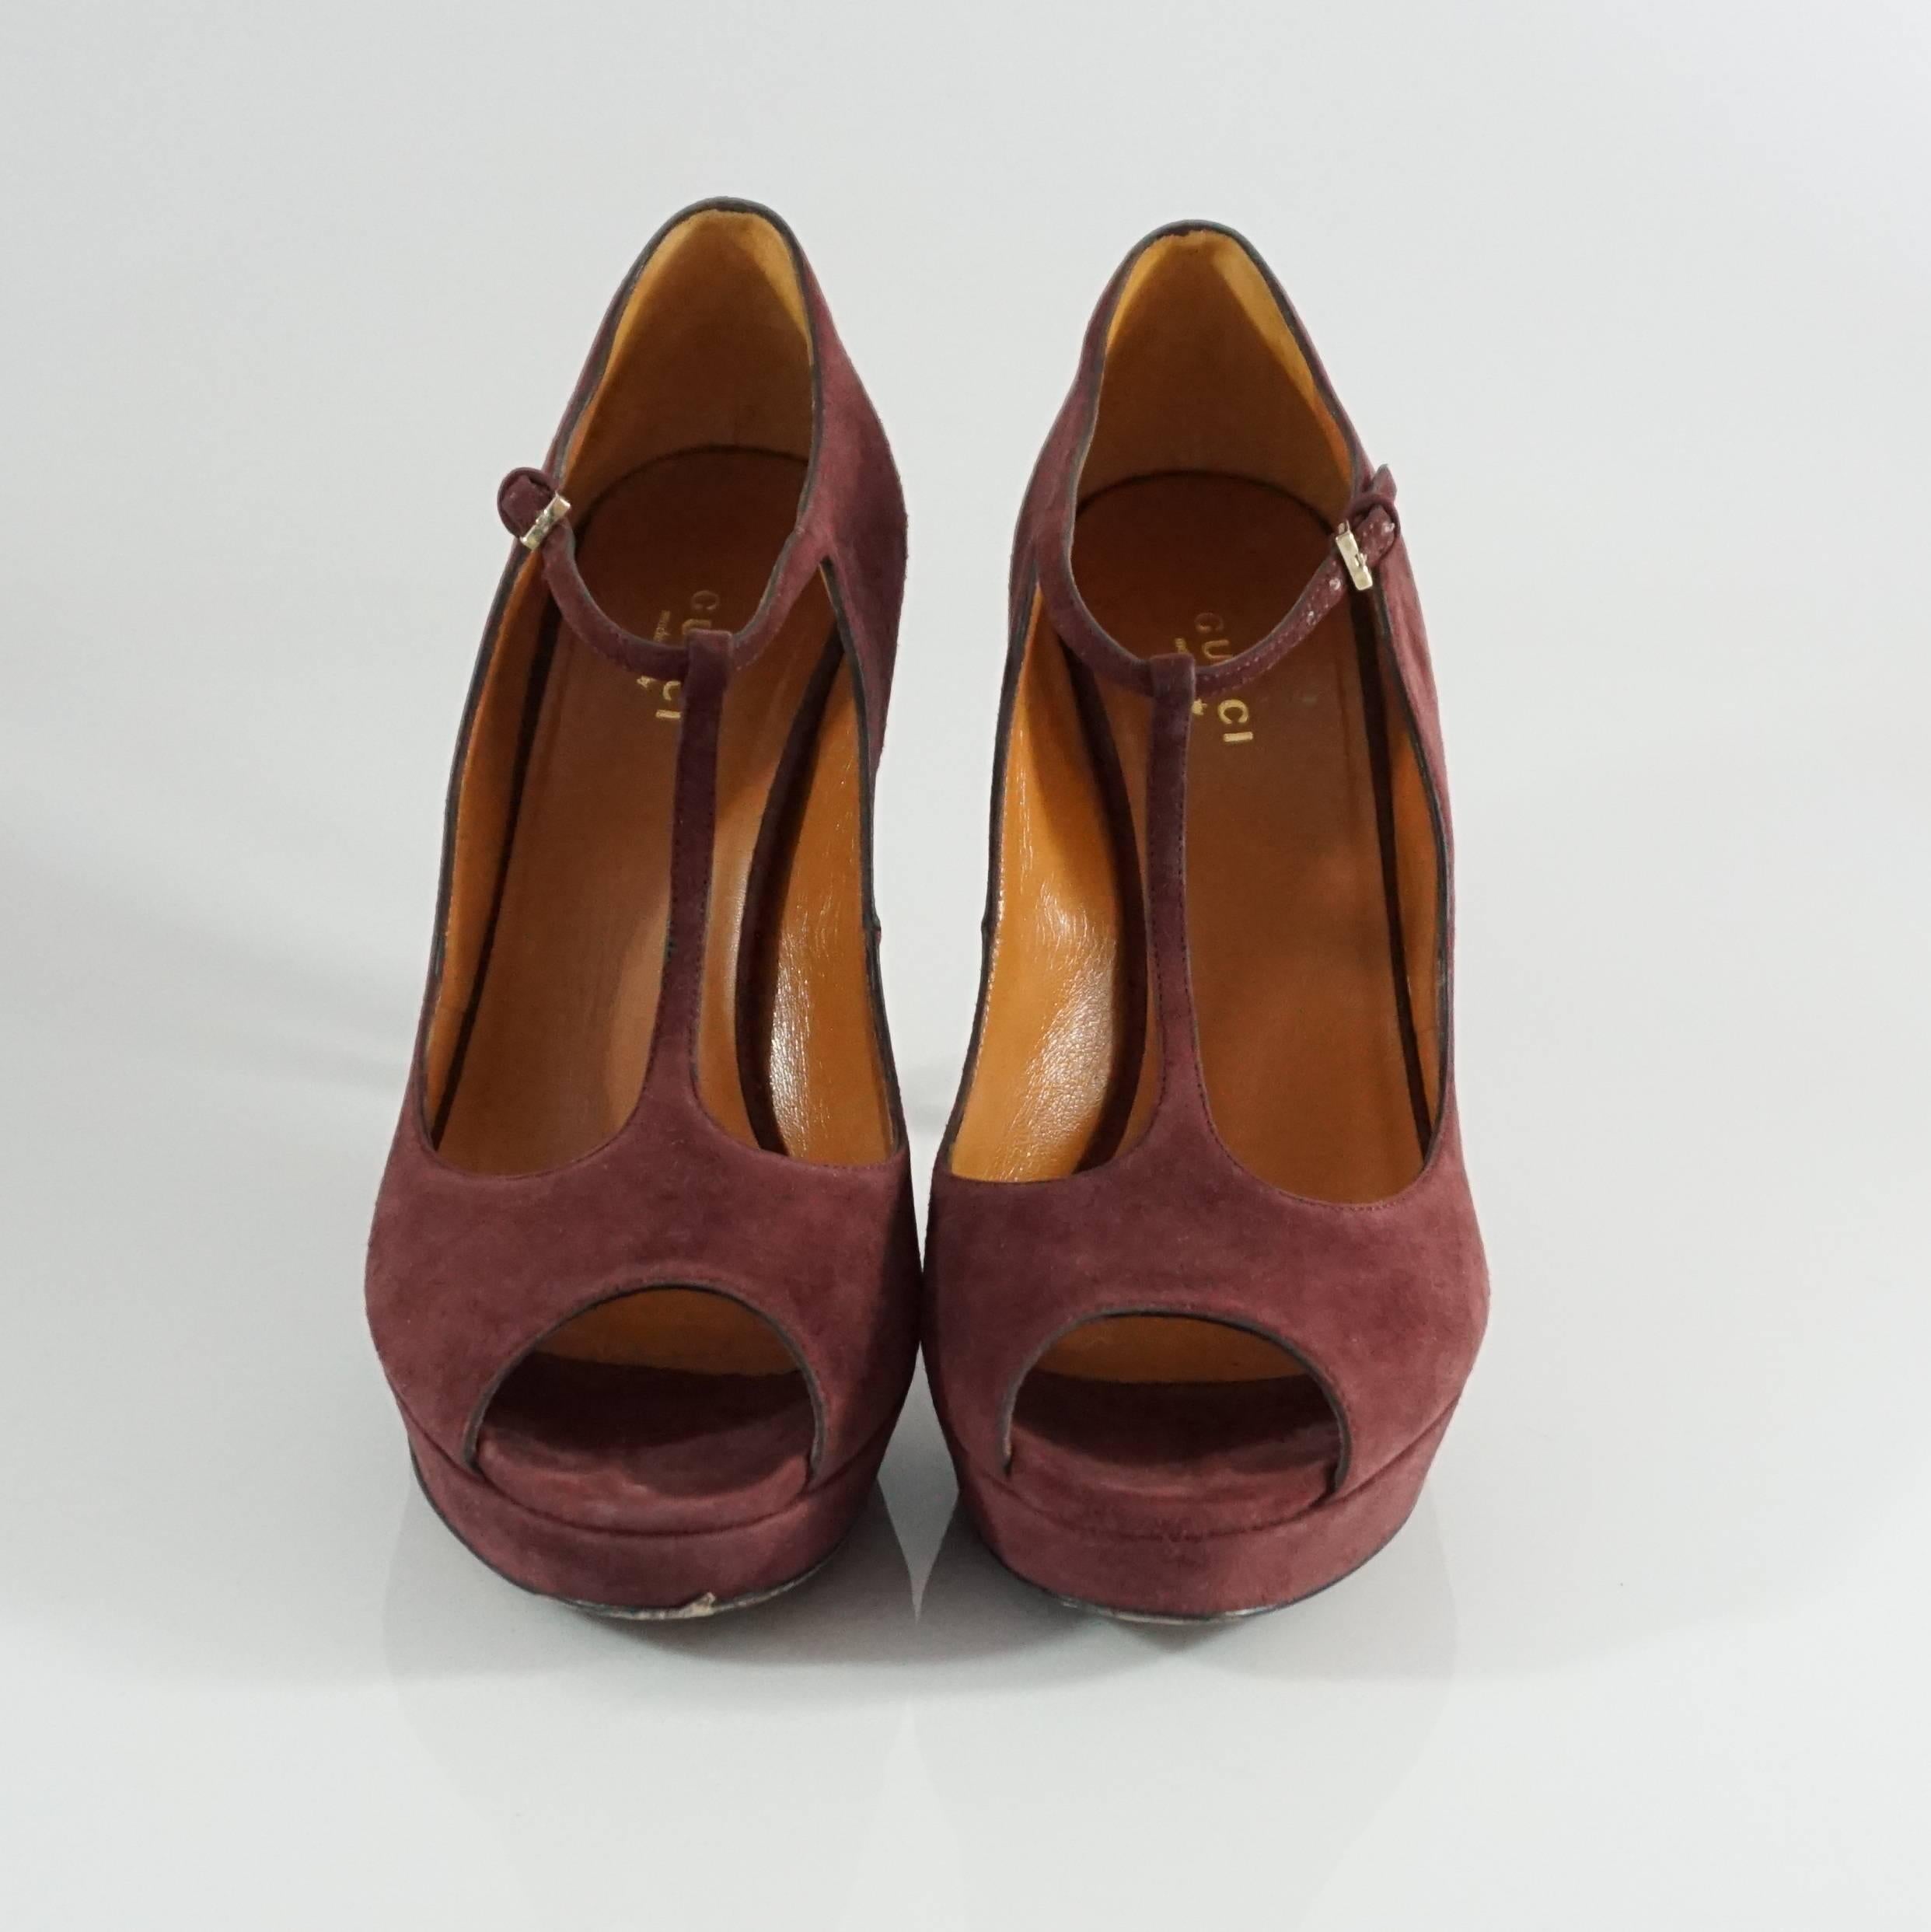 burgundy suede platform heels